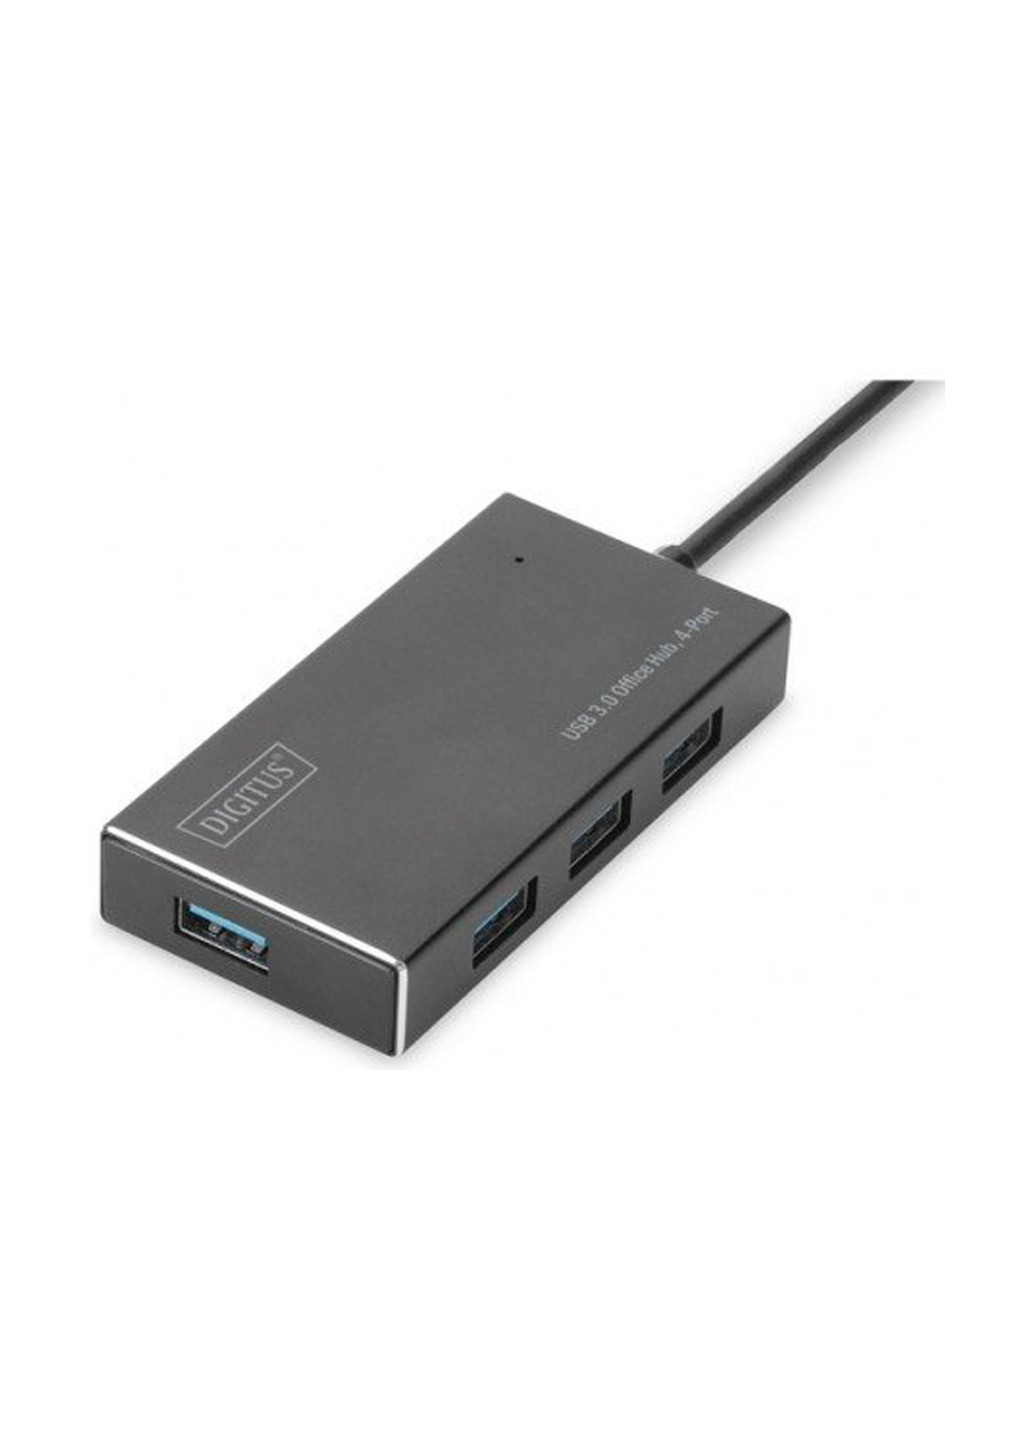 Концентратор USB 3.0 Hub, 4-port (DA-70240-1) Digitus концентратор usb 3.0 hub, 4-port (da-70240-1) (136463889)